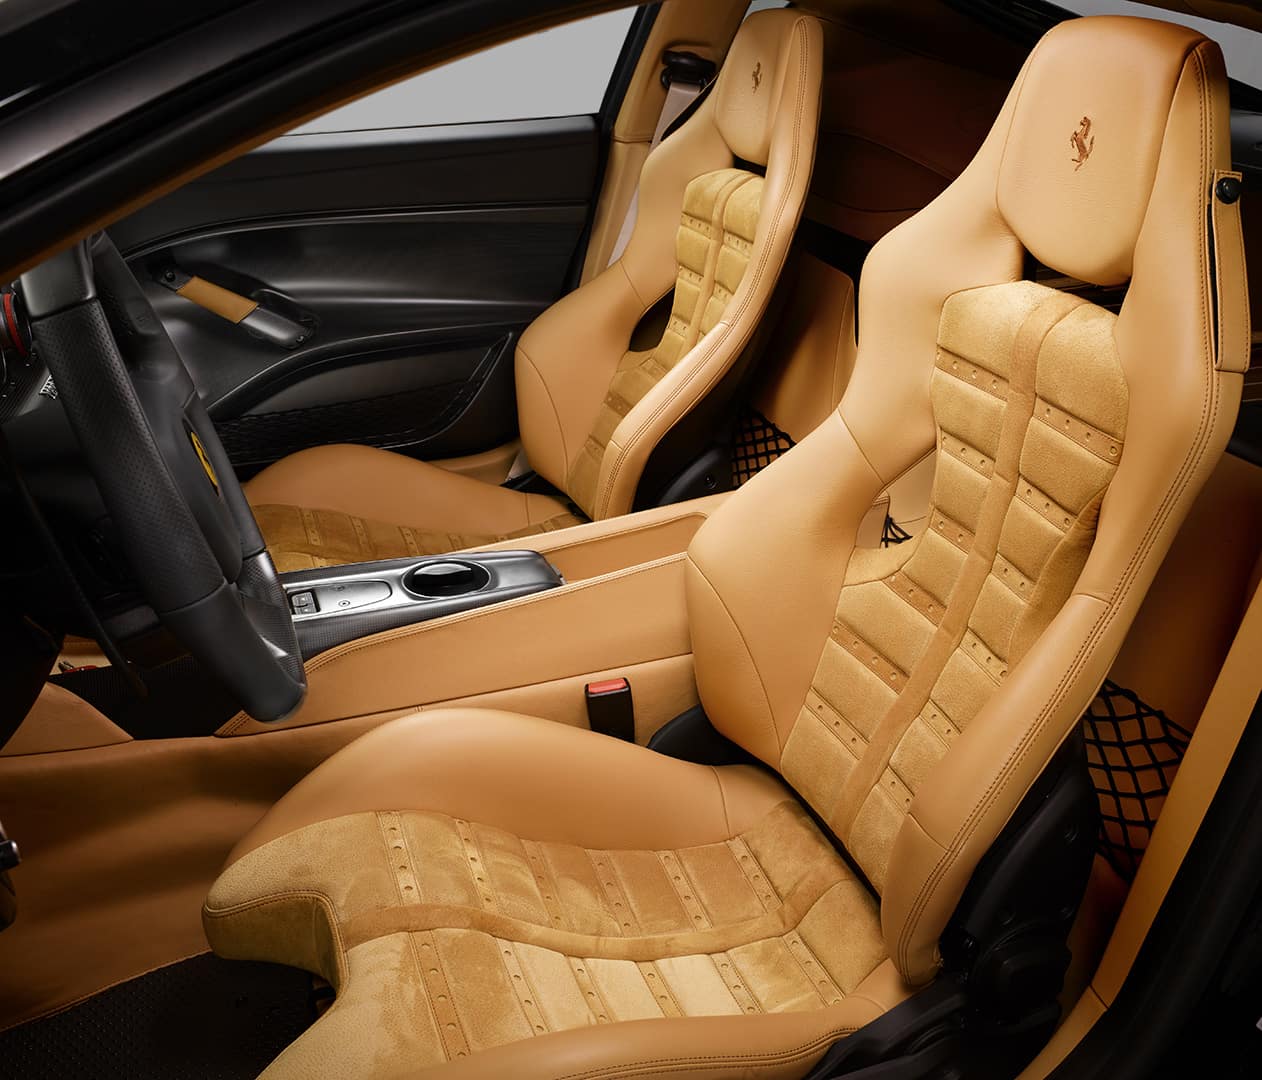 Ferrari F12 interior - Seats